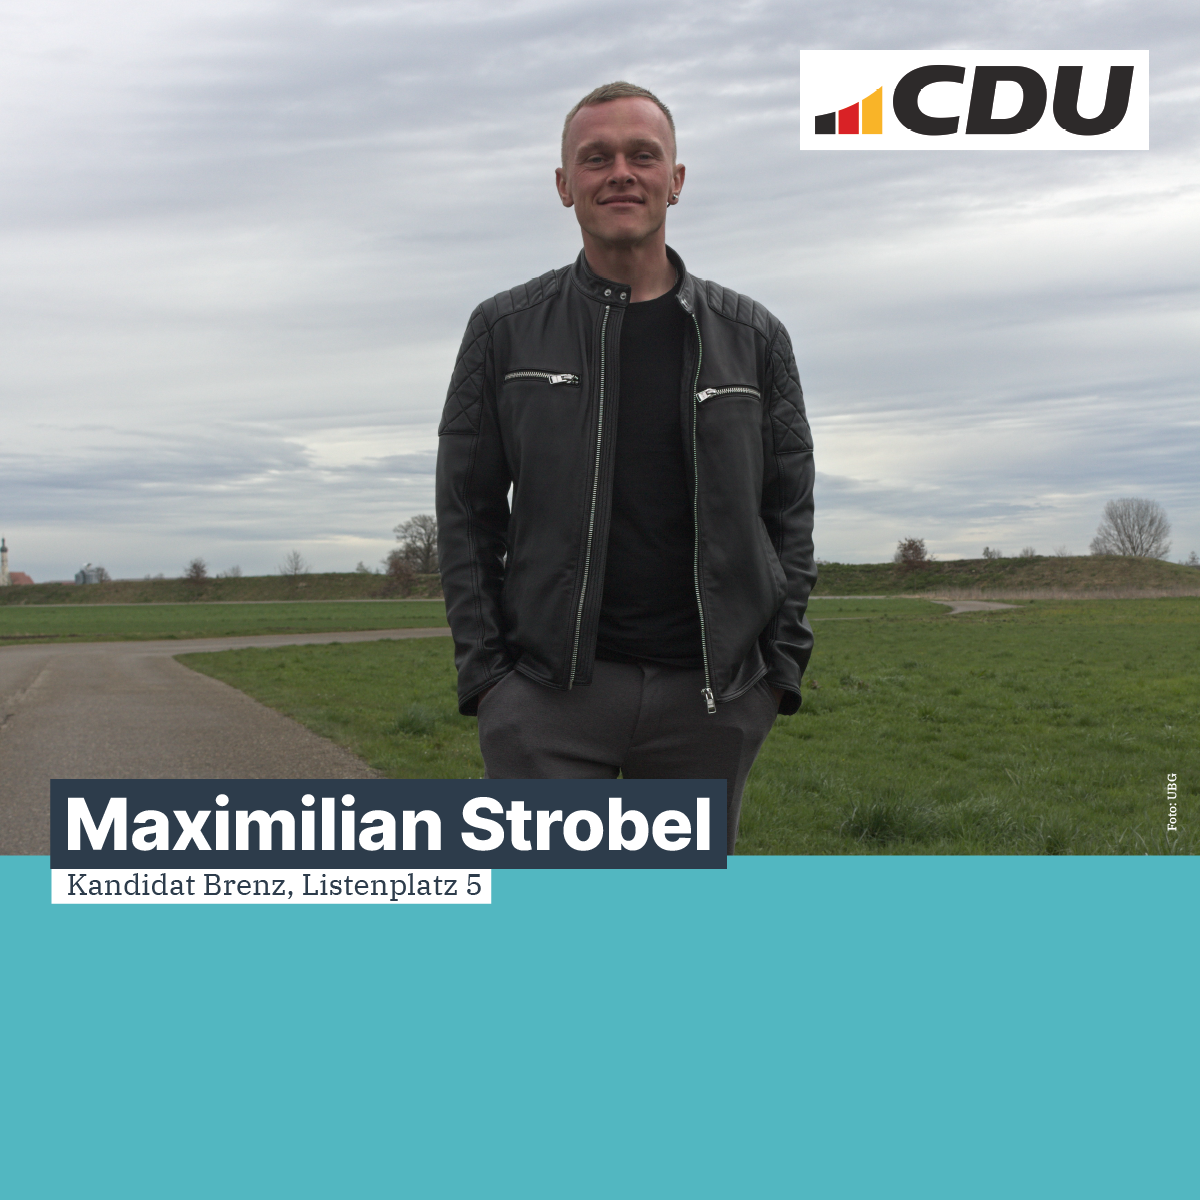  Maximilian Strobel